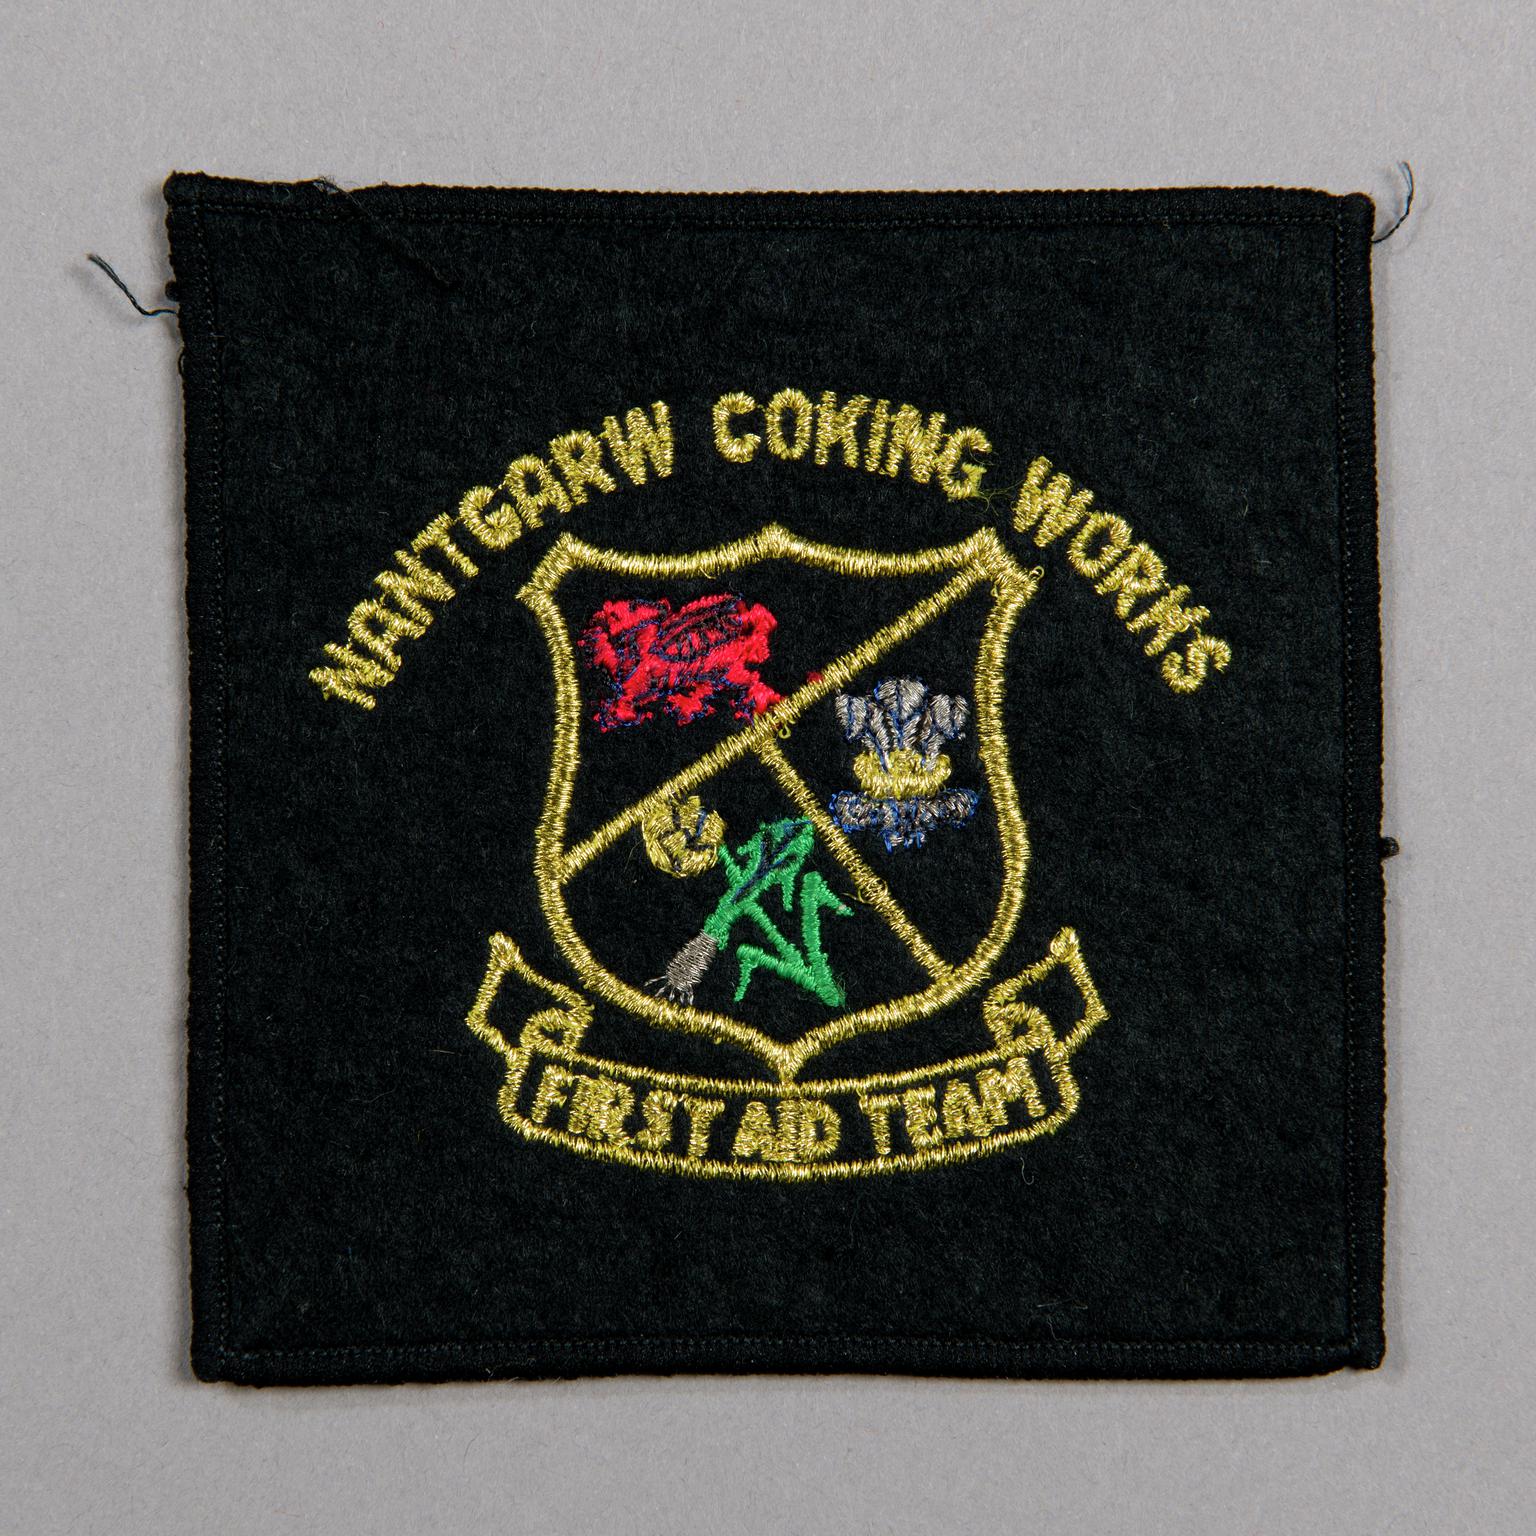 Nantgarw Coking Works First Aid Team, badge